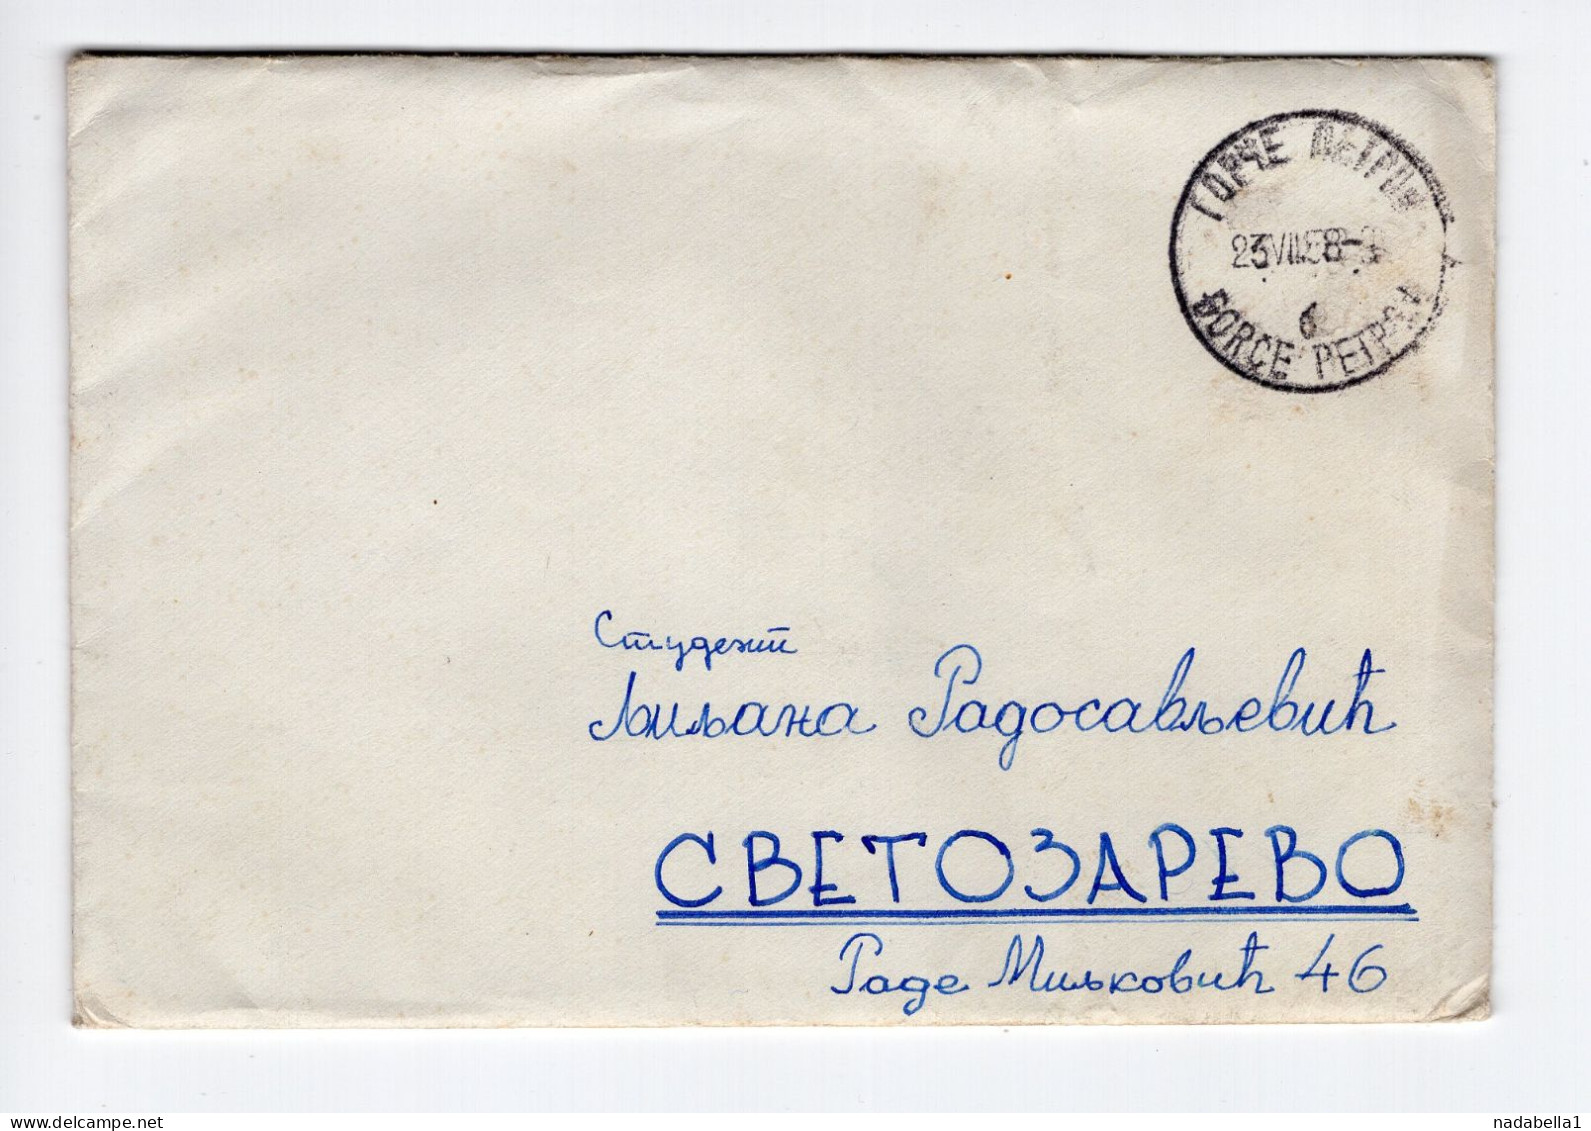 1958. YUGOSLAVIA,MACEDONIA,GORČE PETROV COVER TO SVETOZAREVO,NO STAMP,30 POSTAGE DUE APPLIED - Timbres-taxe